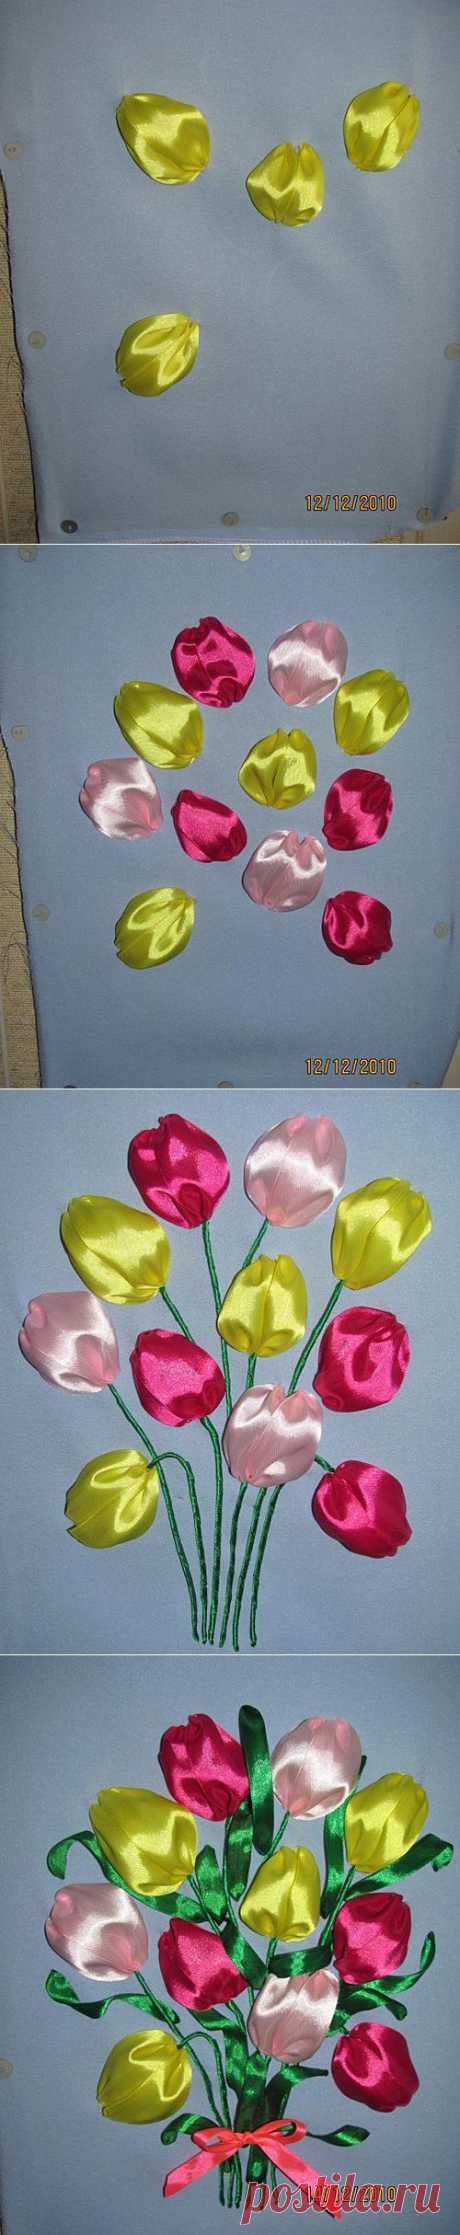 Вышиваем лентами тюльпаны | Домохозяйки